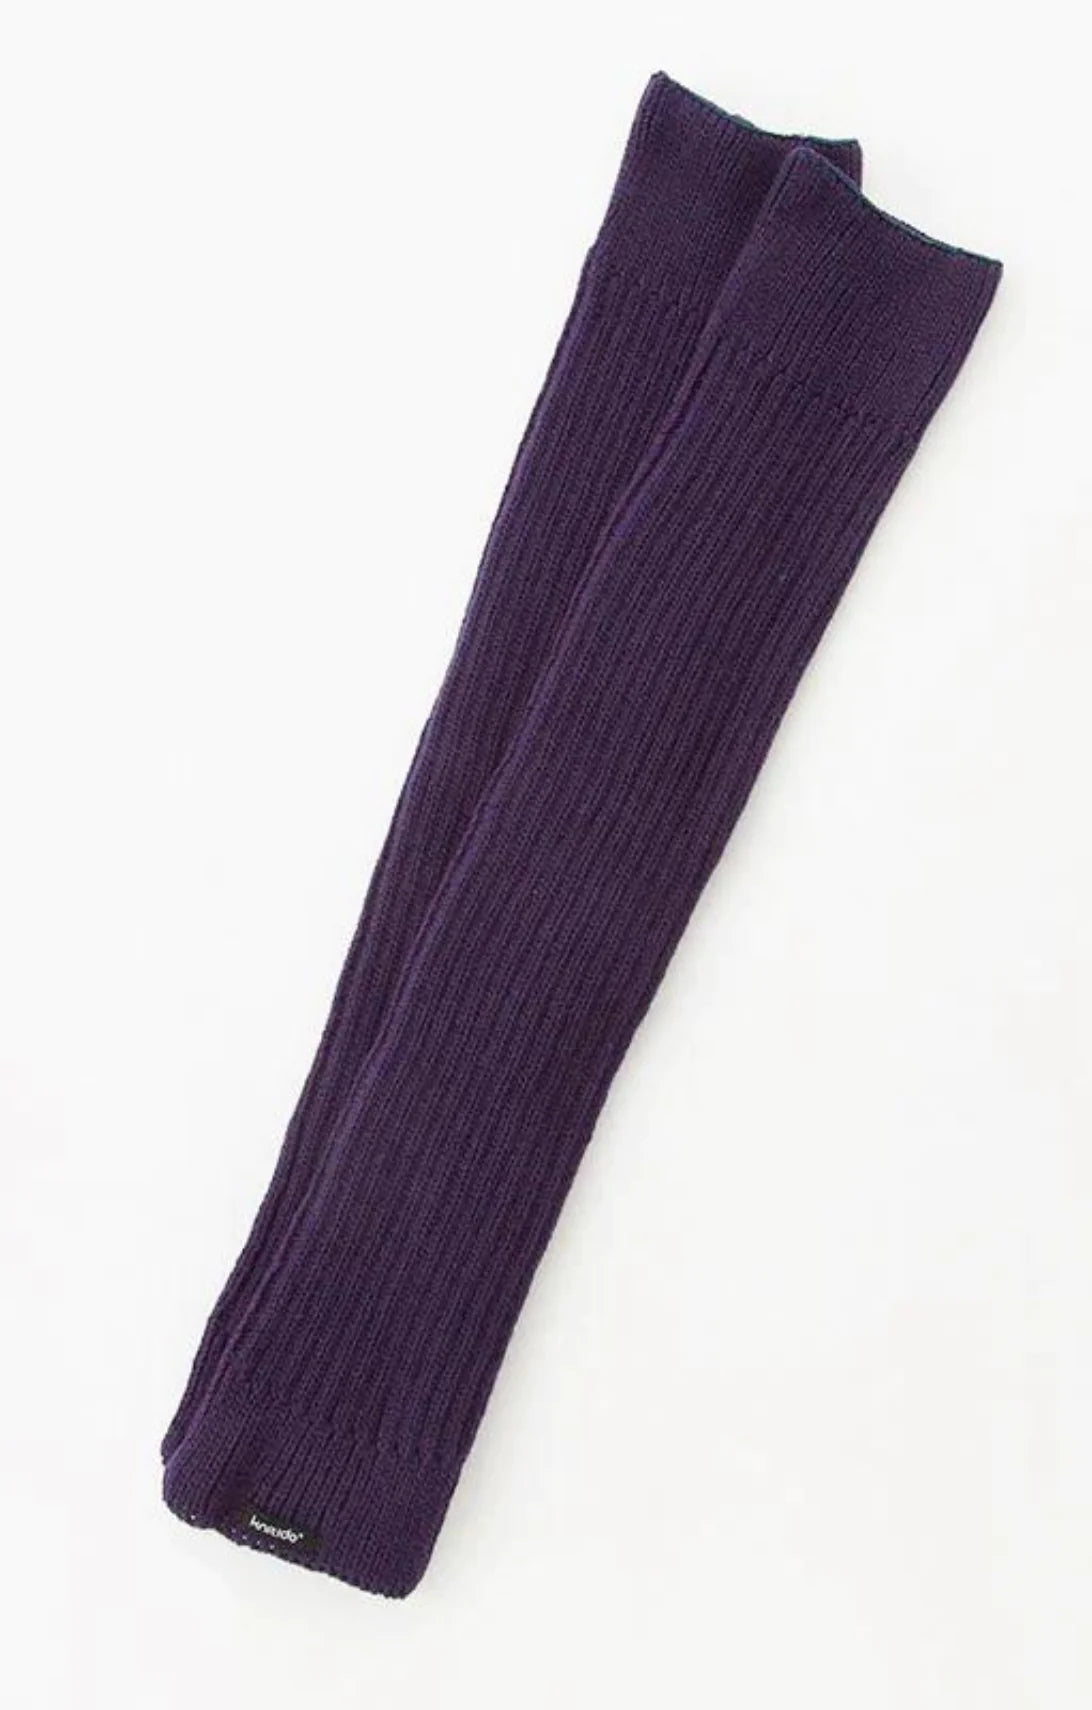 Knitido plus brand Wool Blend Ribbed Leg Warmer in Purple color